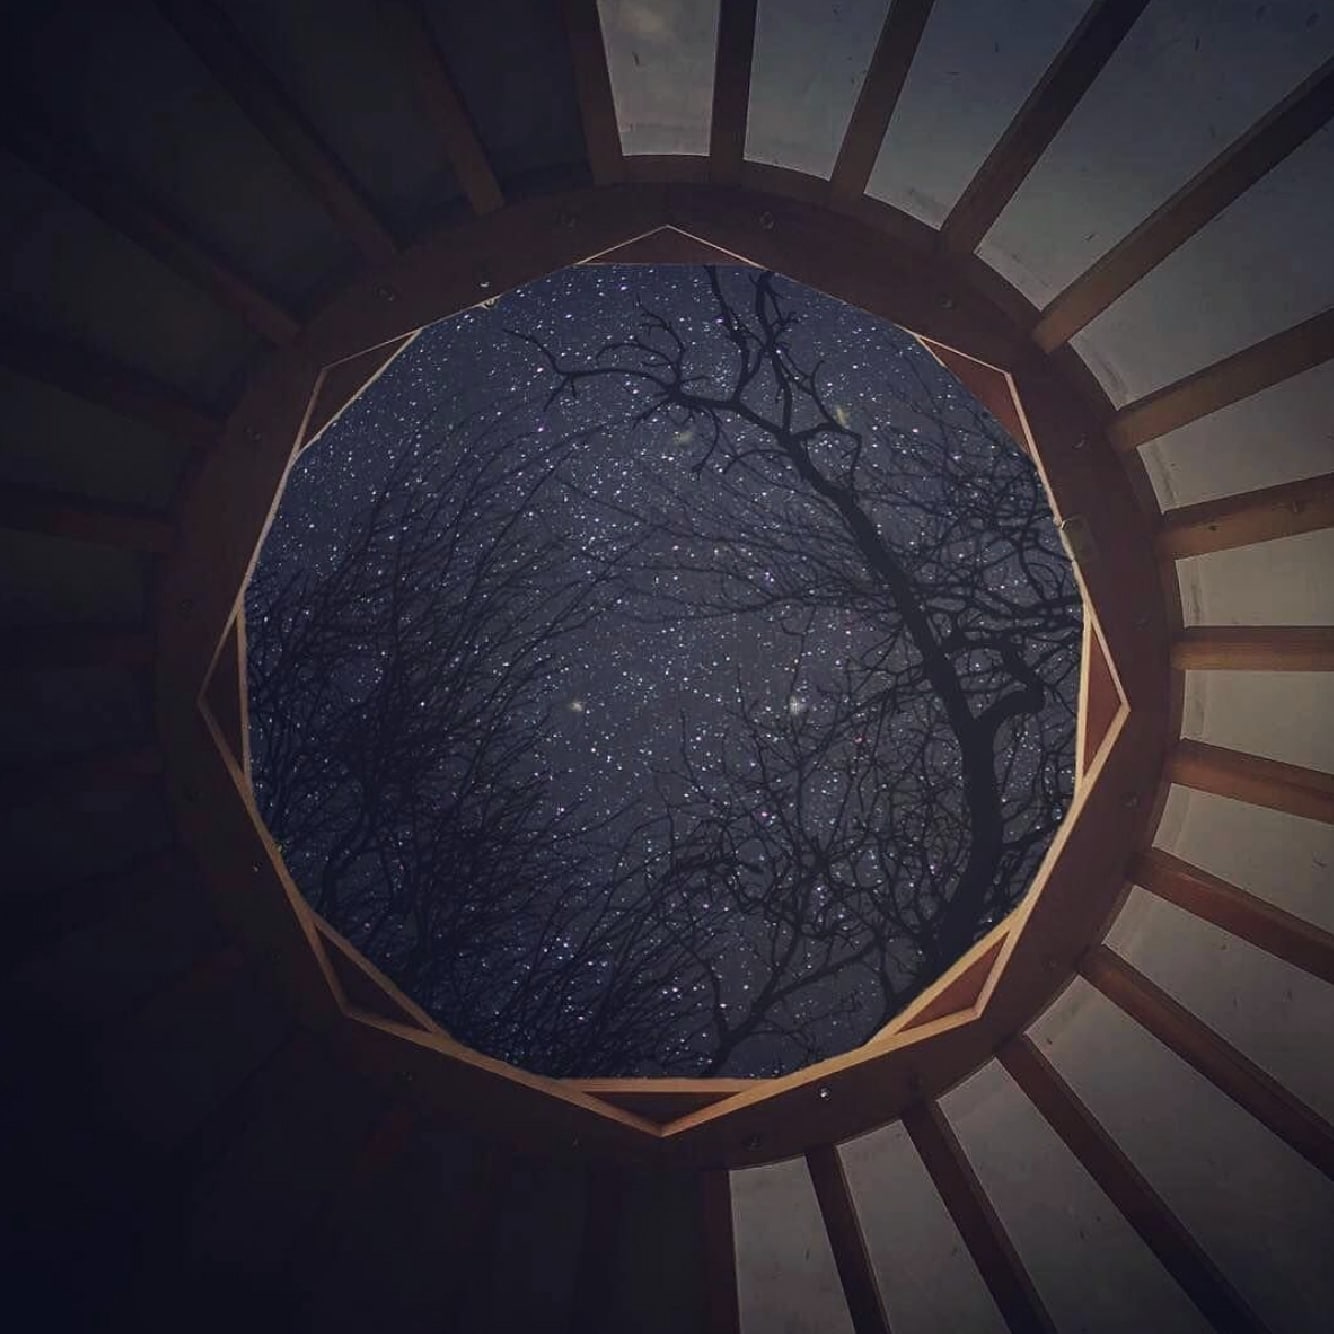 yurt skylight